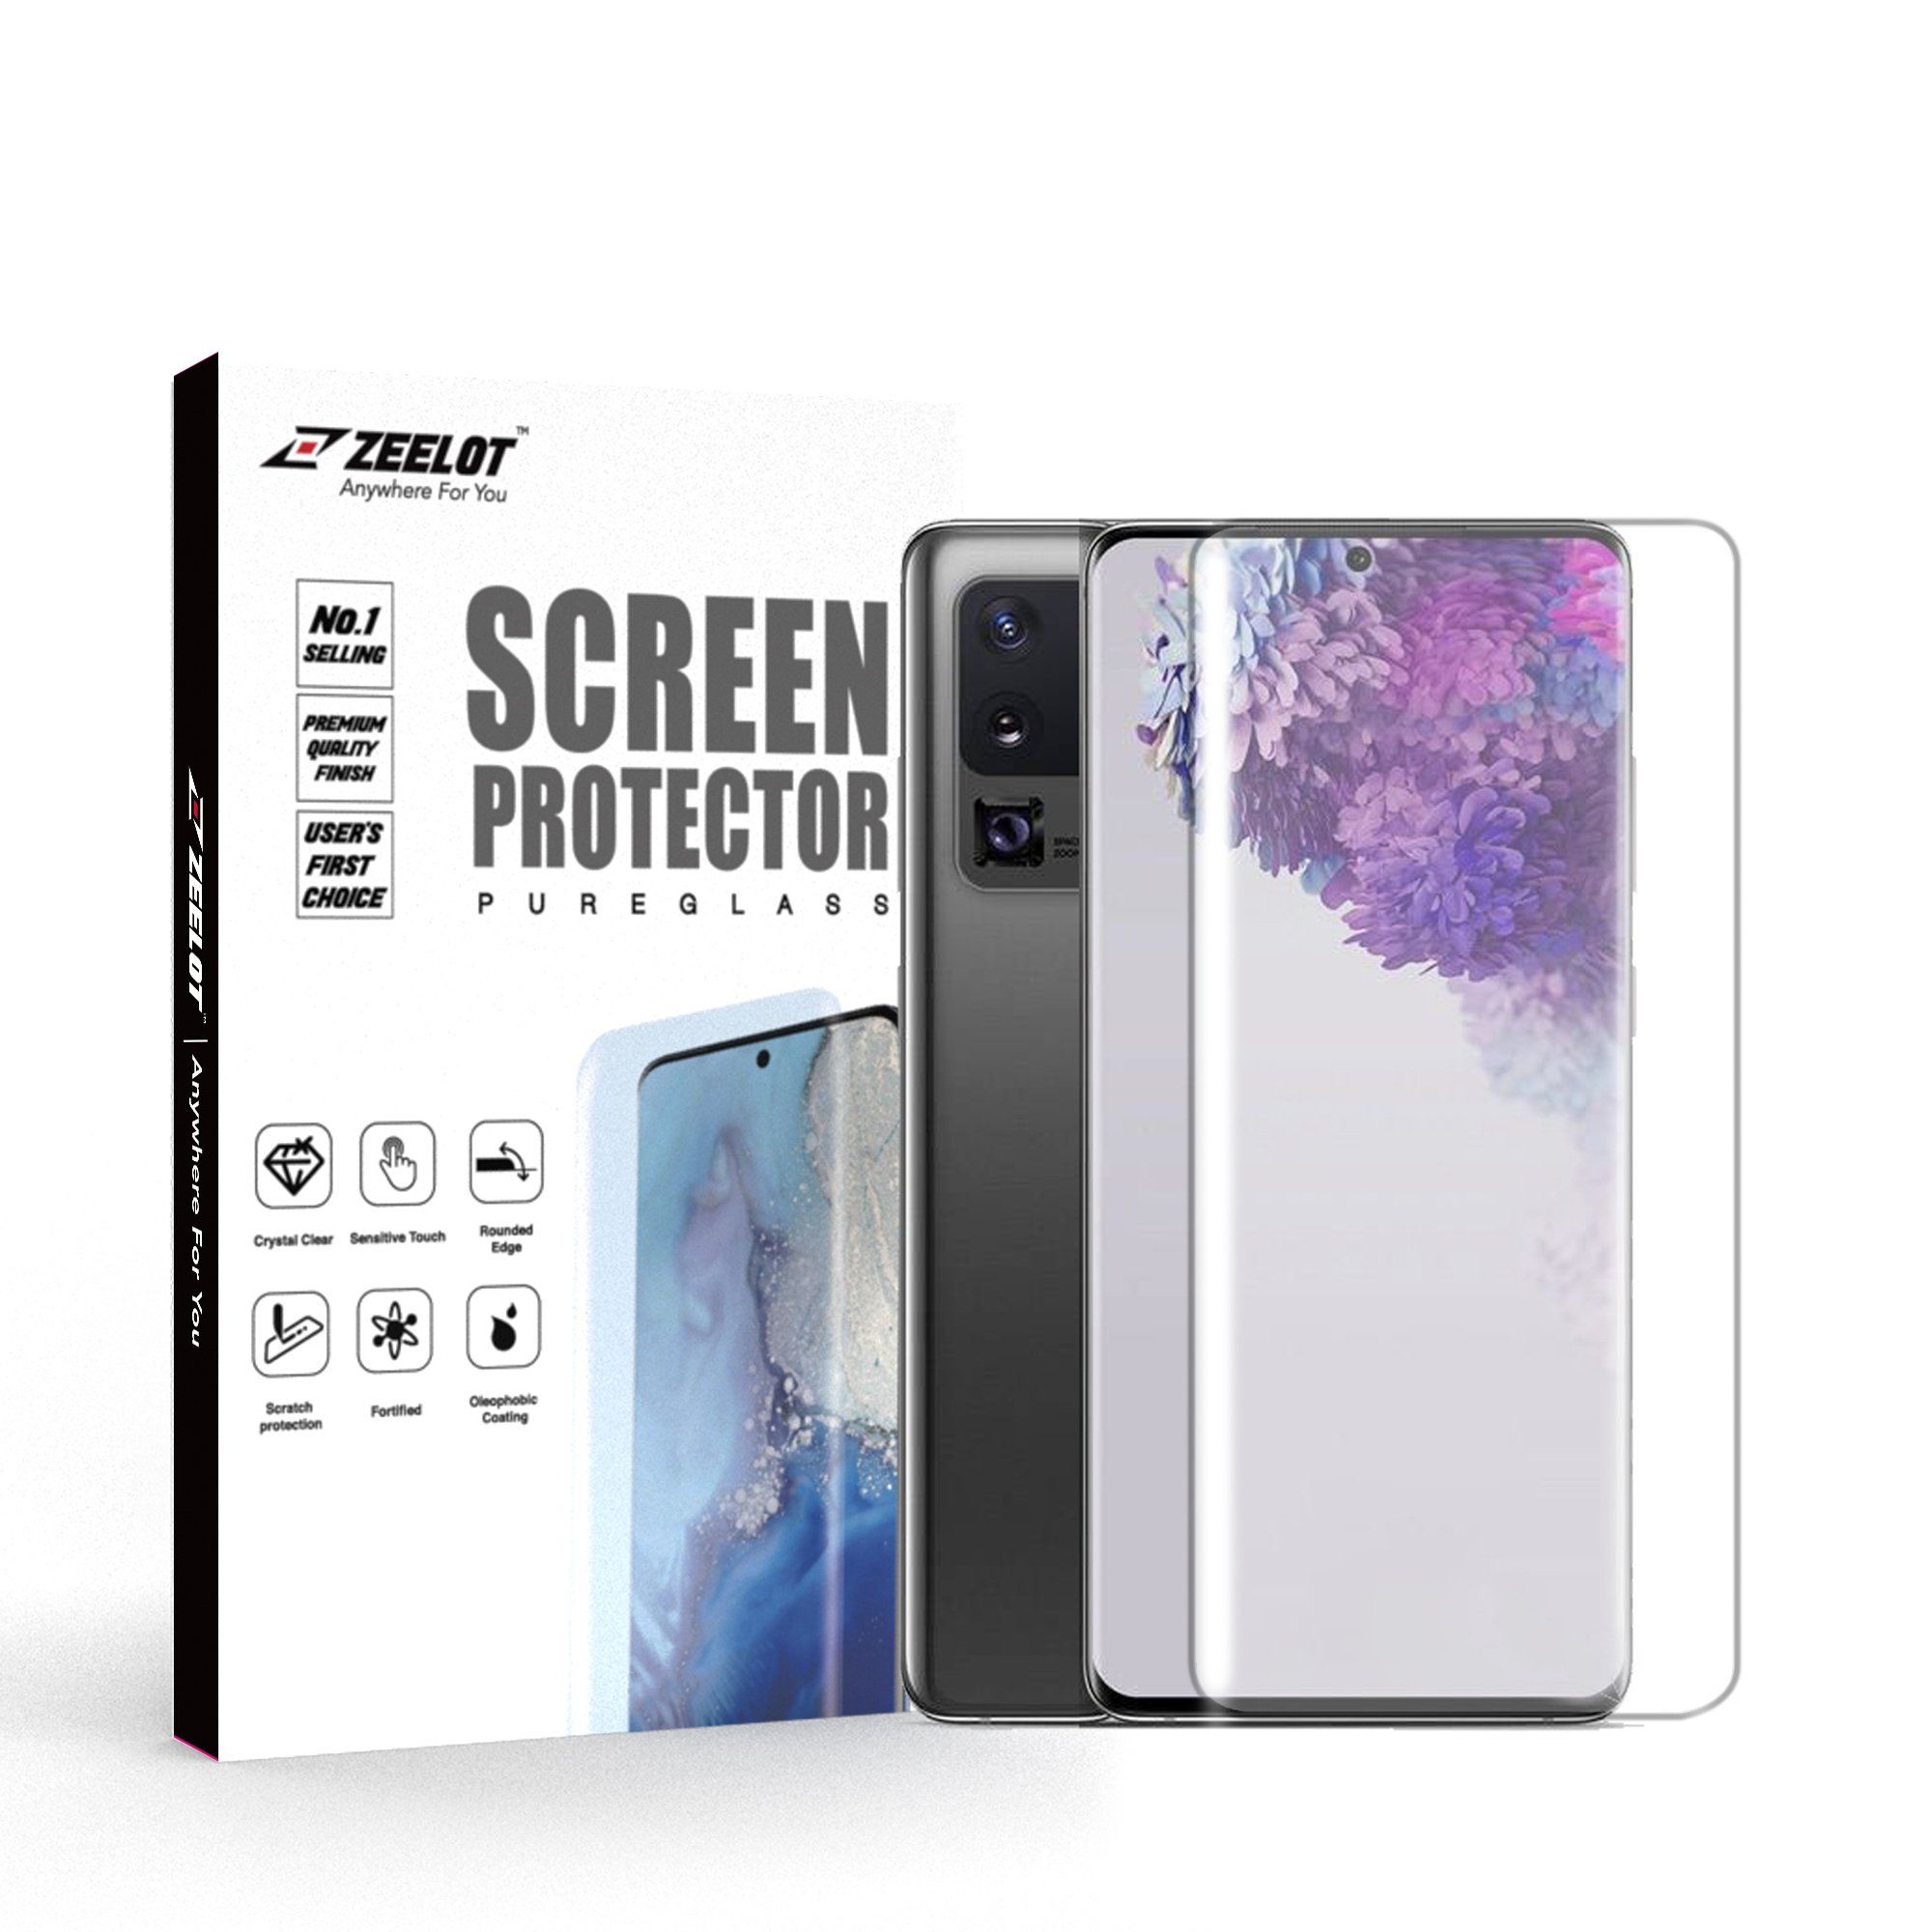 ZEELOT PureGlass 3D Matte LOCA Corning Tempered Glass Screen Protector for Samsung Galaxy S20 Ultra LOCA Tempered Glass Zeelot 